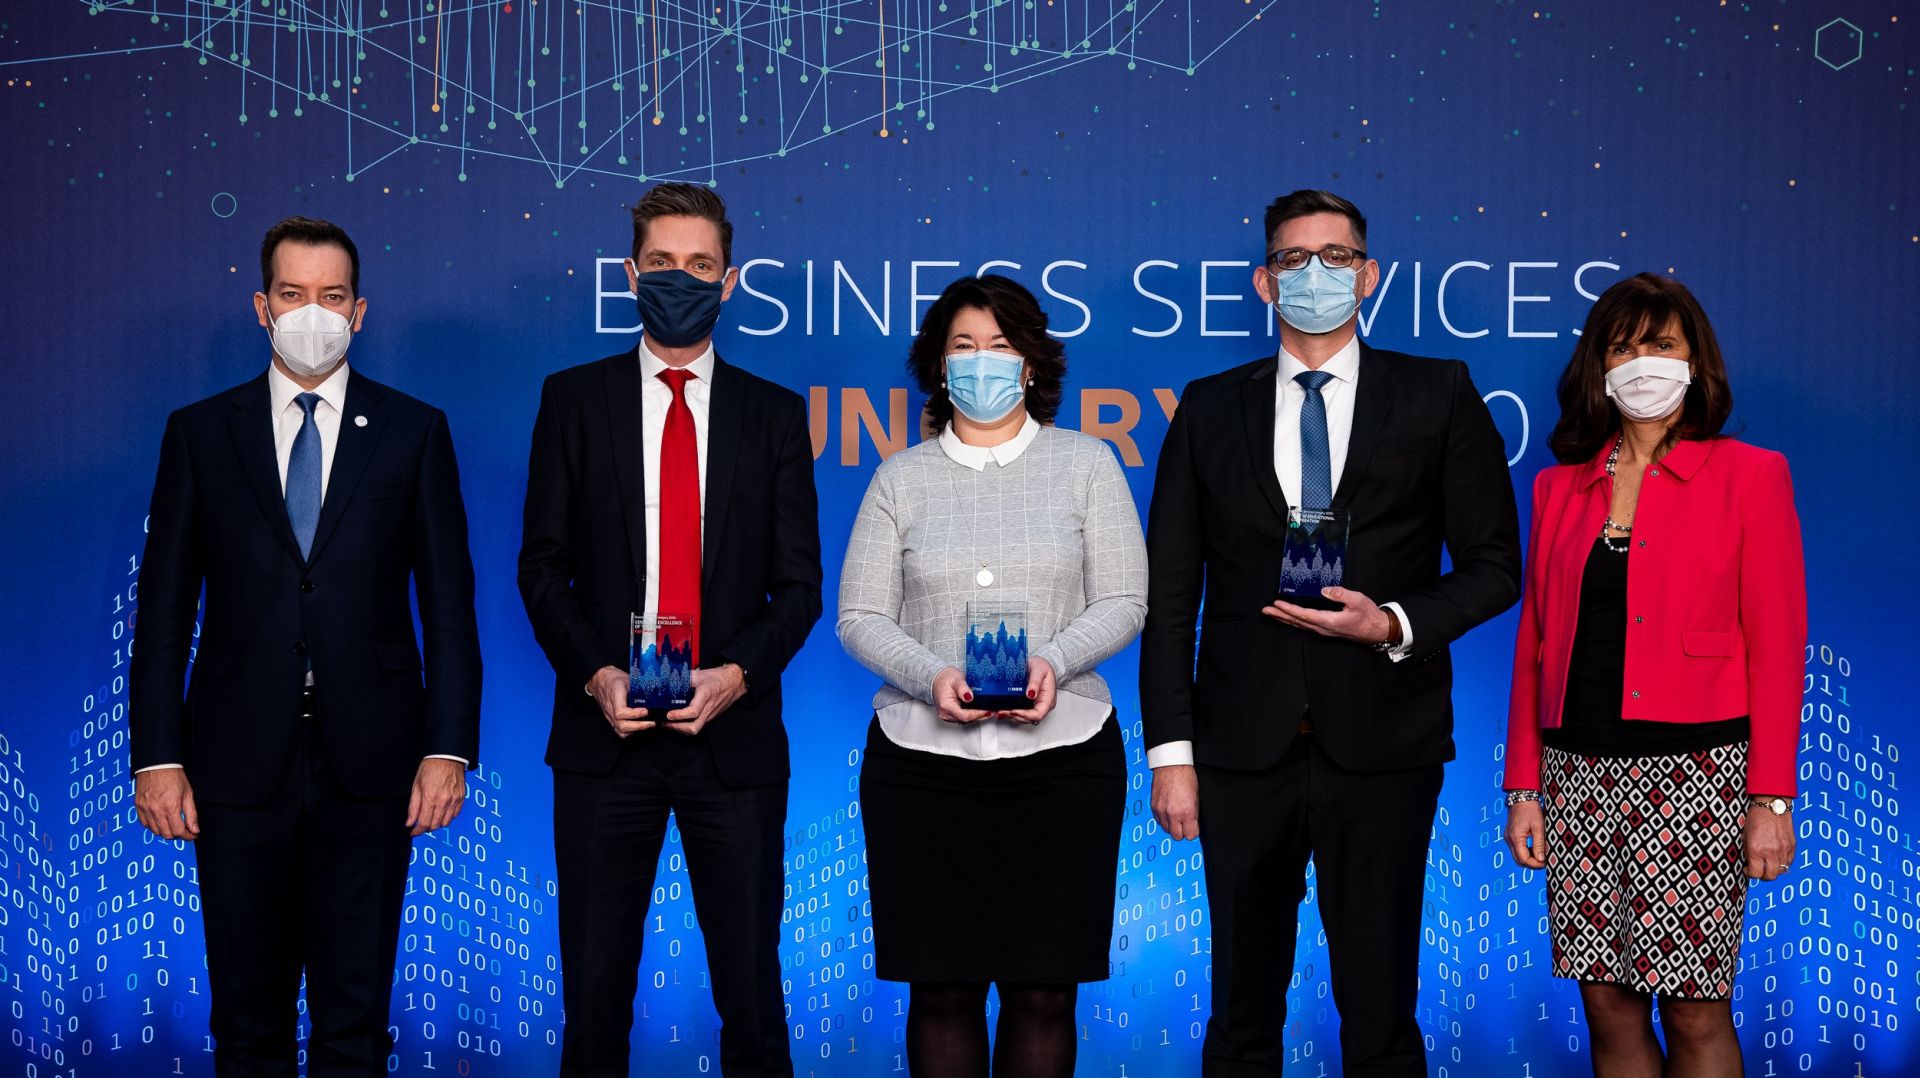 HIPA-BSS Business Services Hungary 2020 award winners